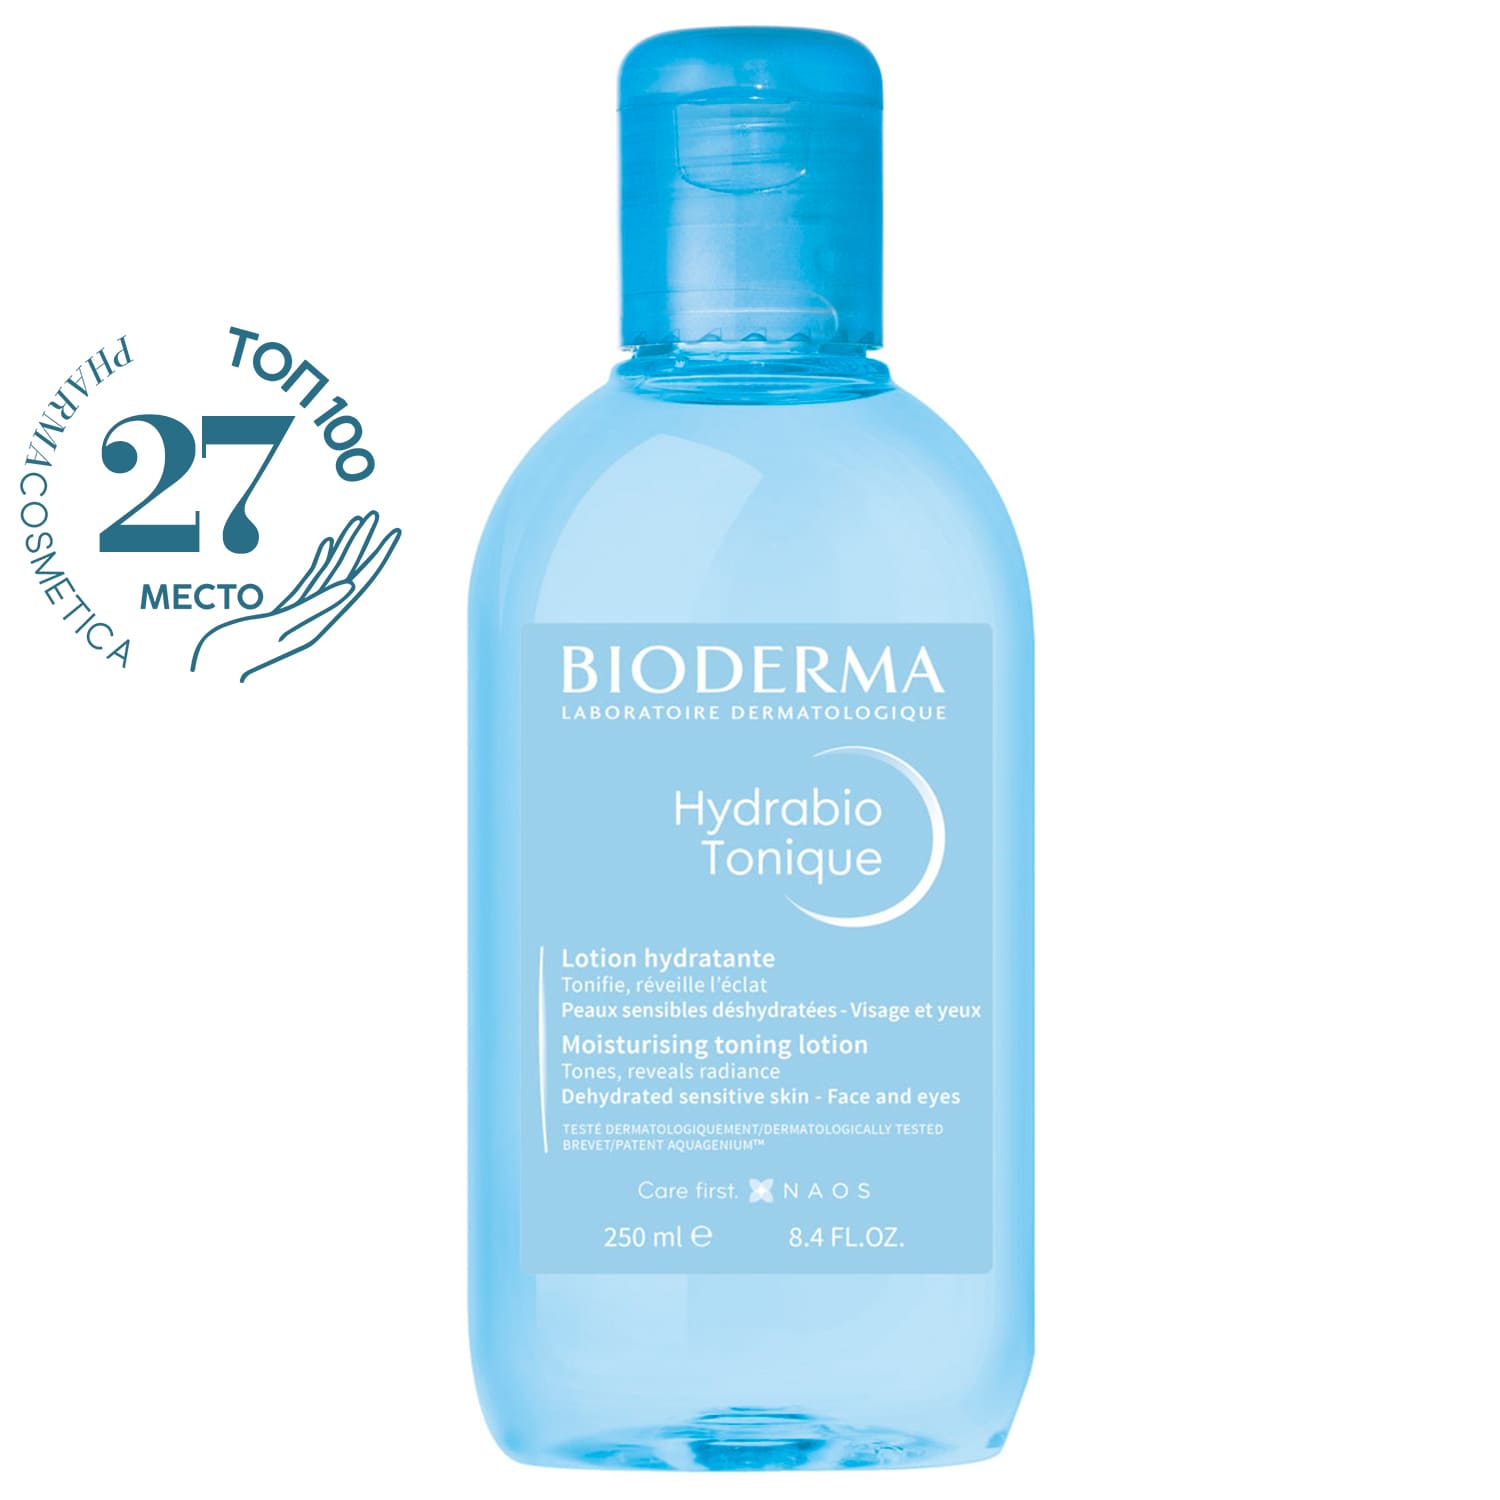 Bioderma Увлажняющий лосьон для обезвоженной кожи, 250 мл (Bioderma, Hydrabio) bioderma набор очищение и уход за обезвоженной кожей bioderma hydrabio